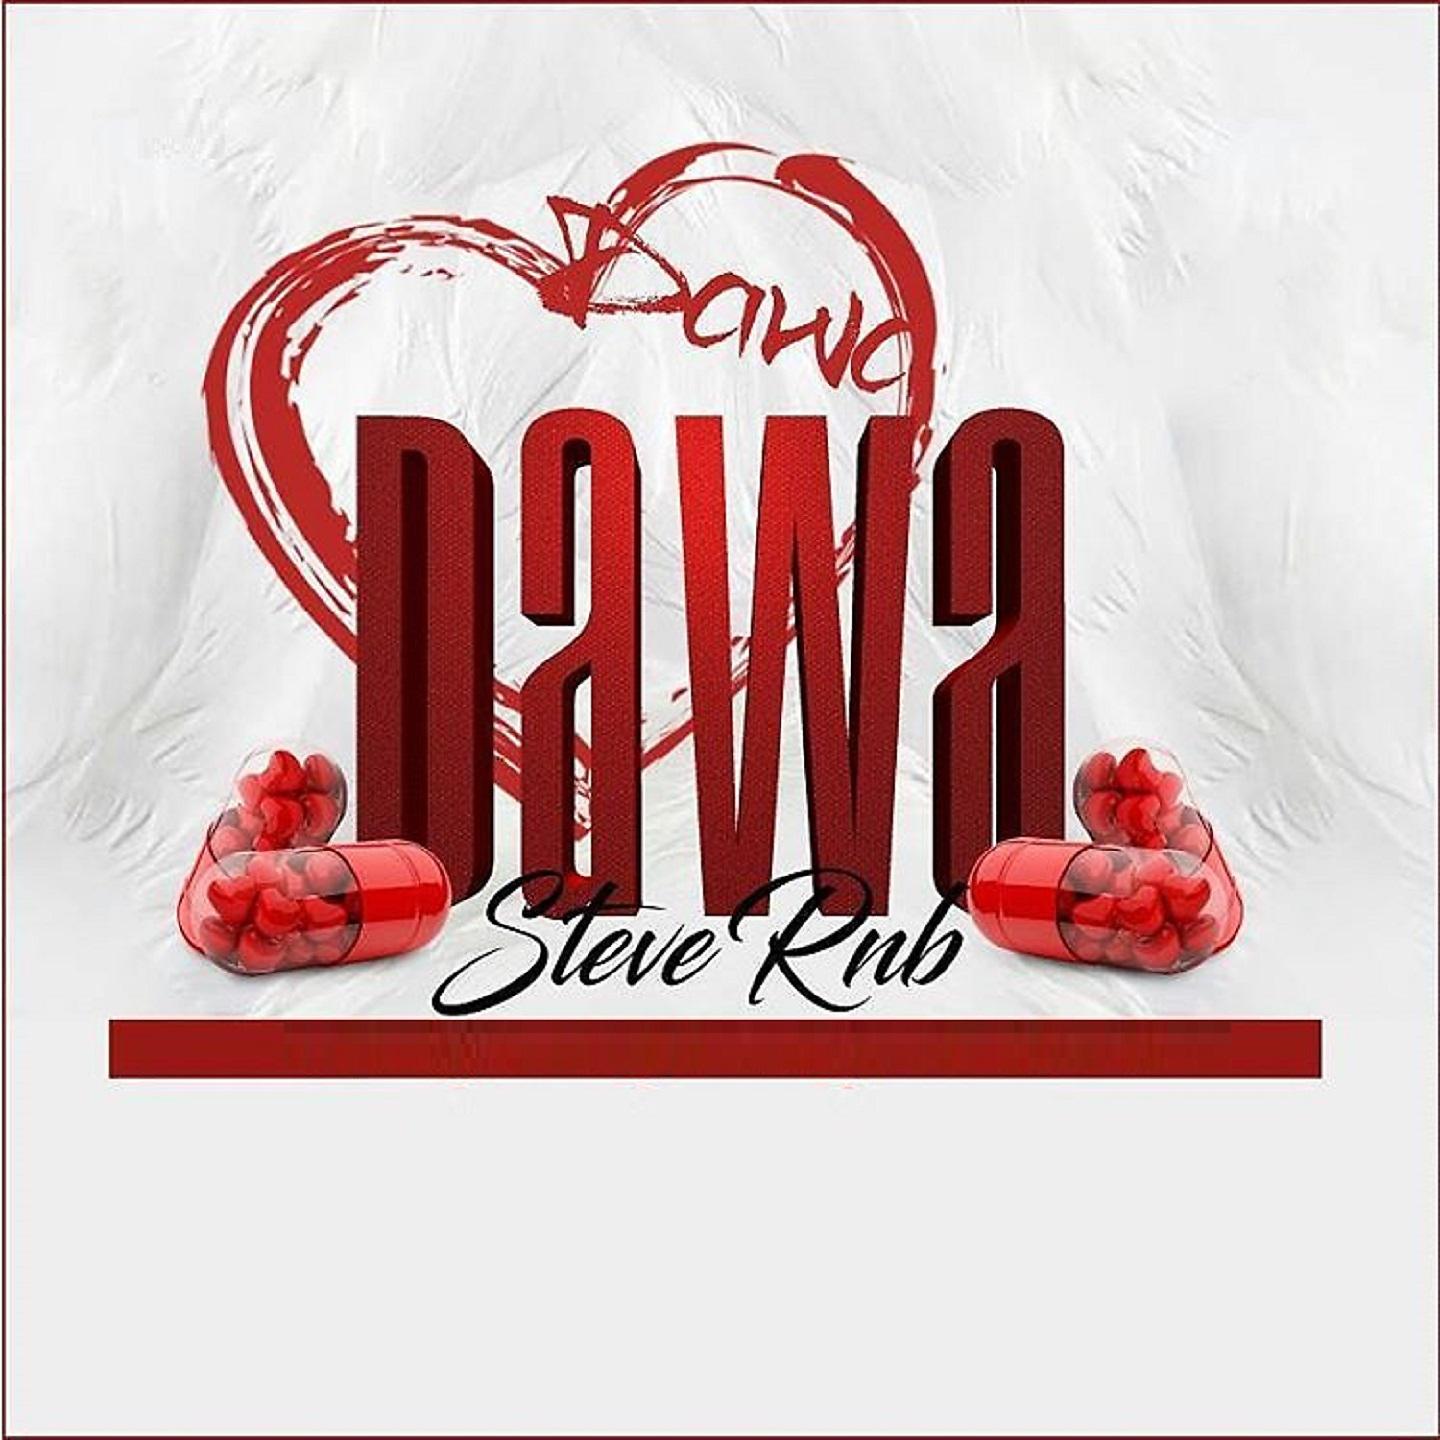 Постер альбома Dawa